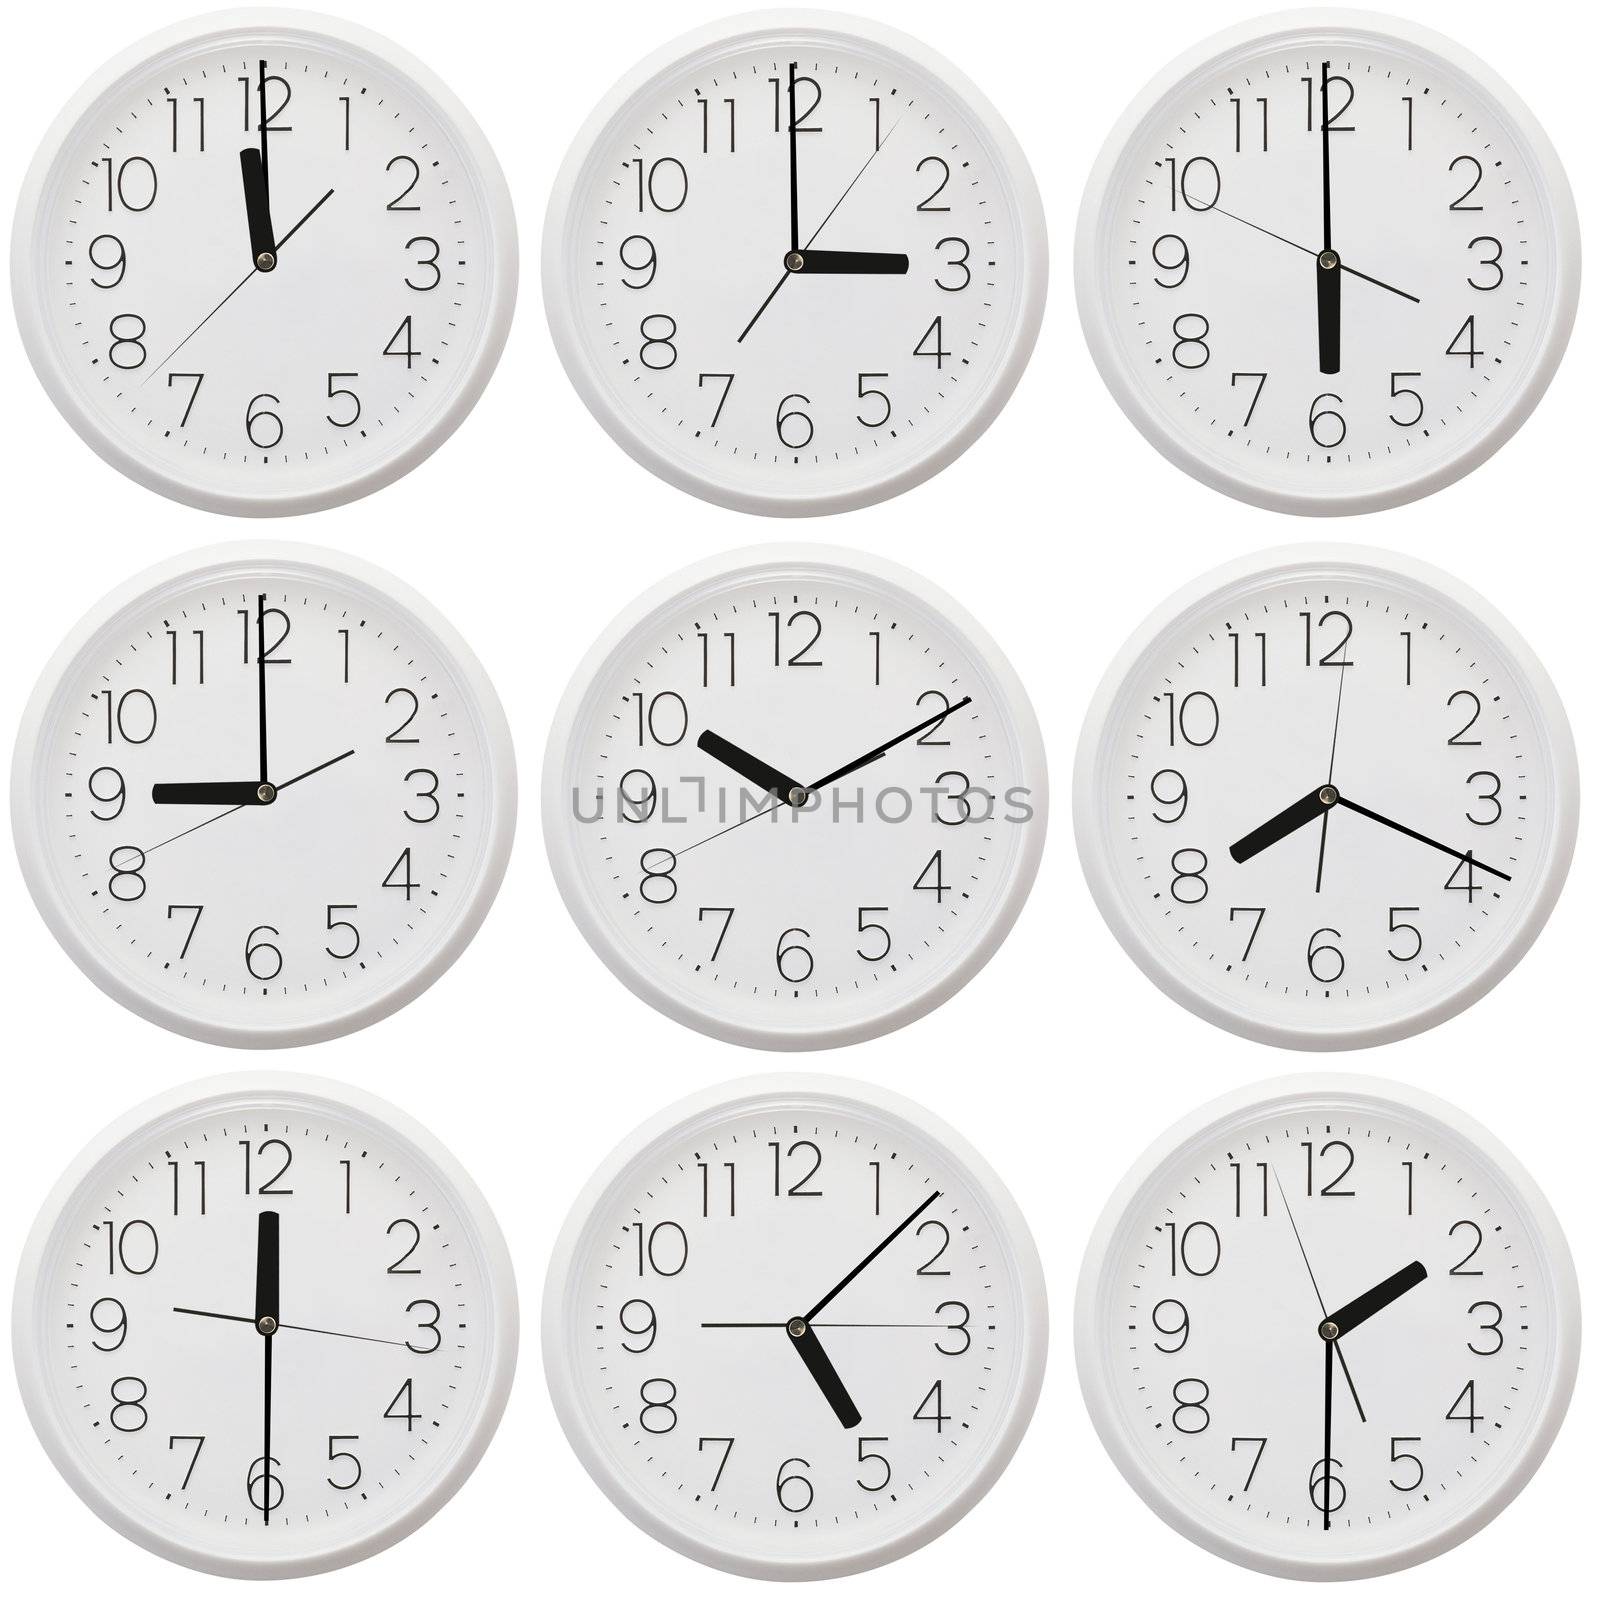 Nine clock by petrkurgan